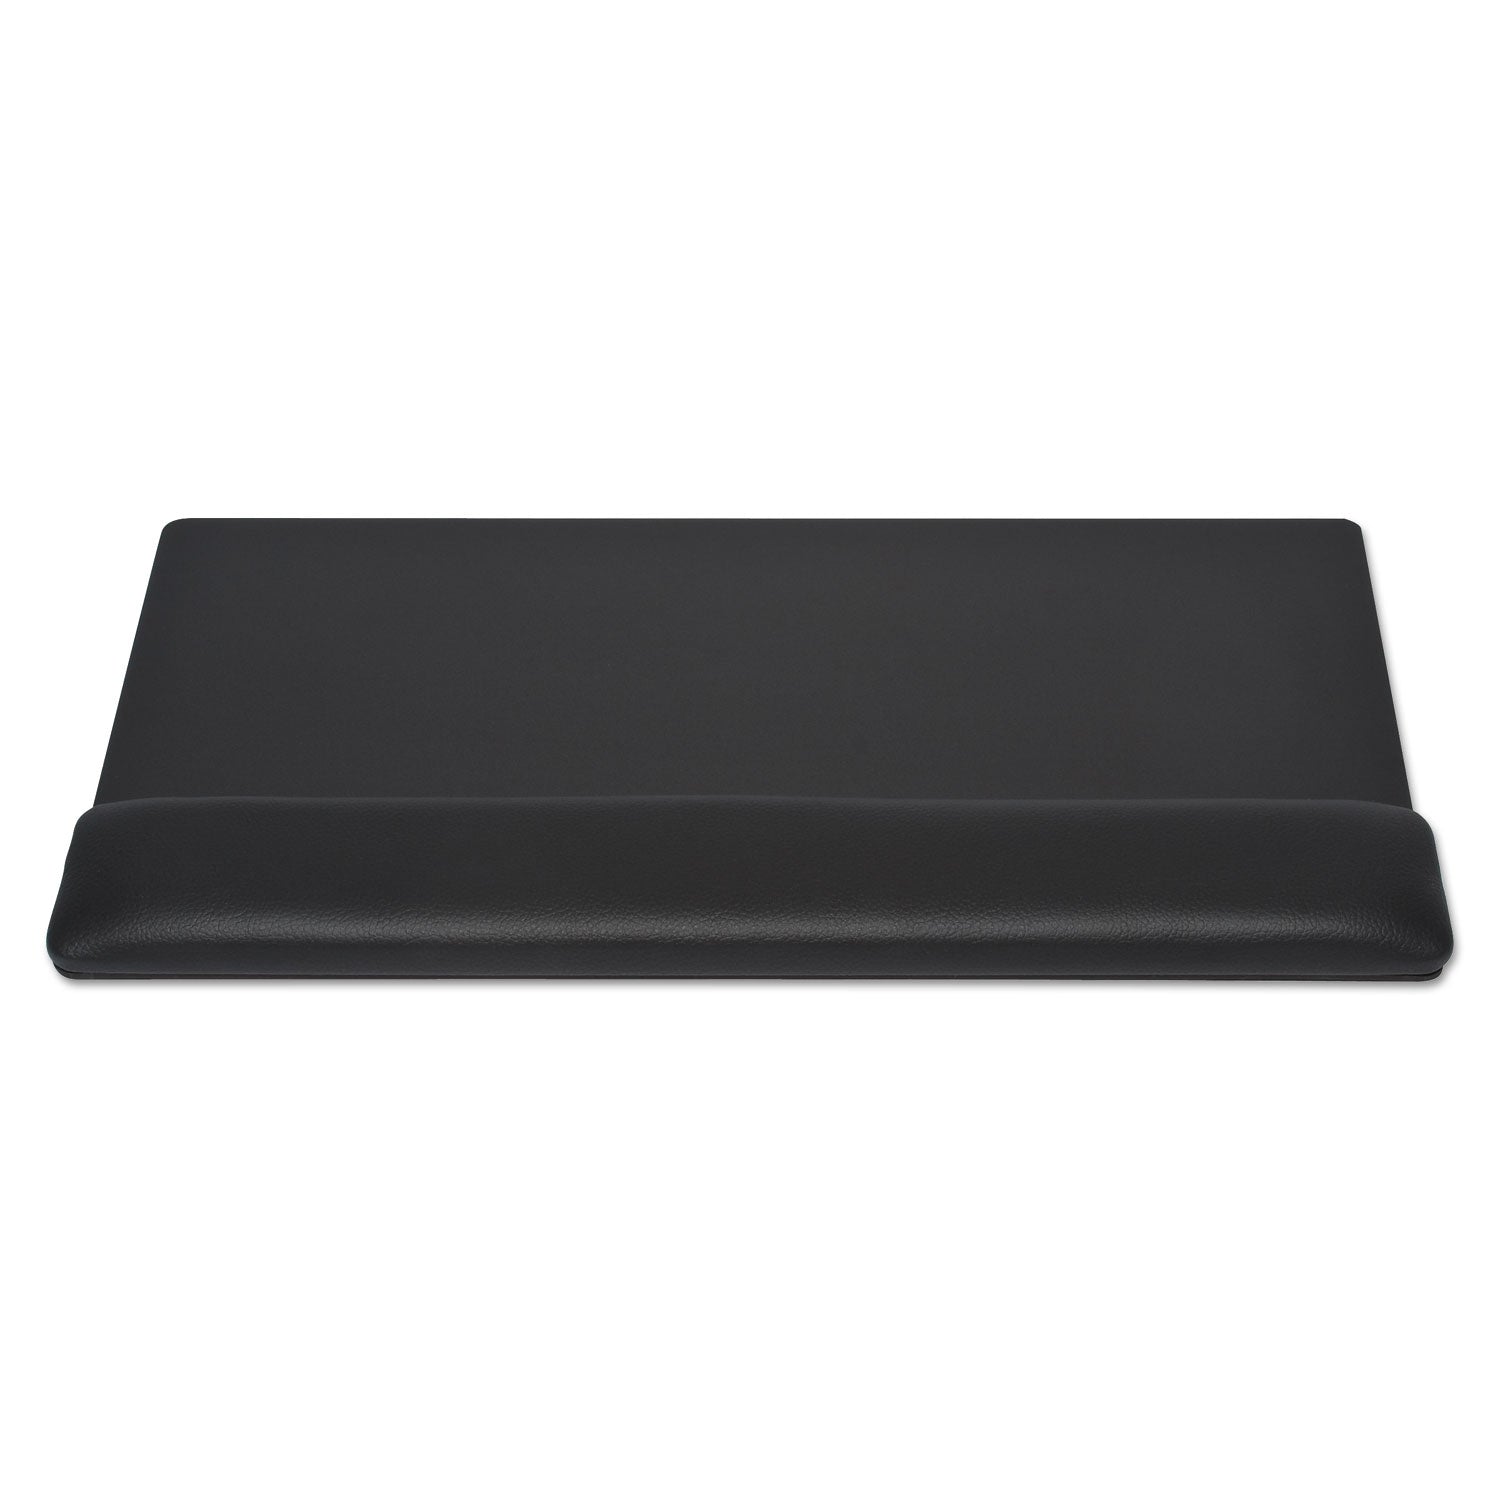 Soft Backed Keyboard Wrist Rest, 19 x 10, Black - 